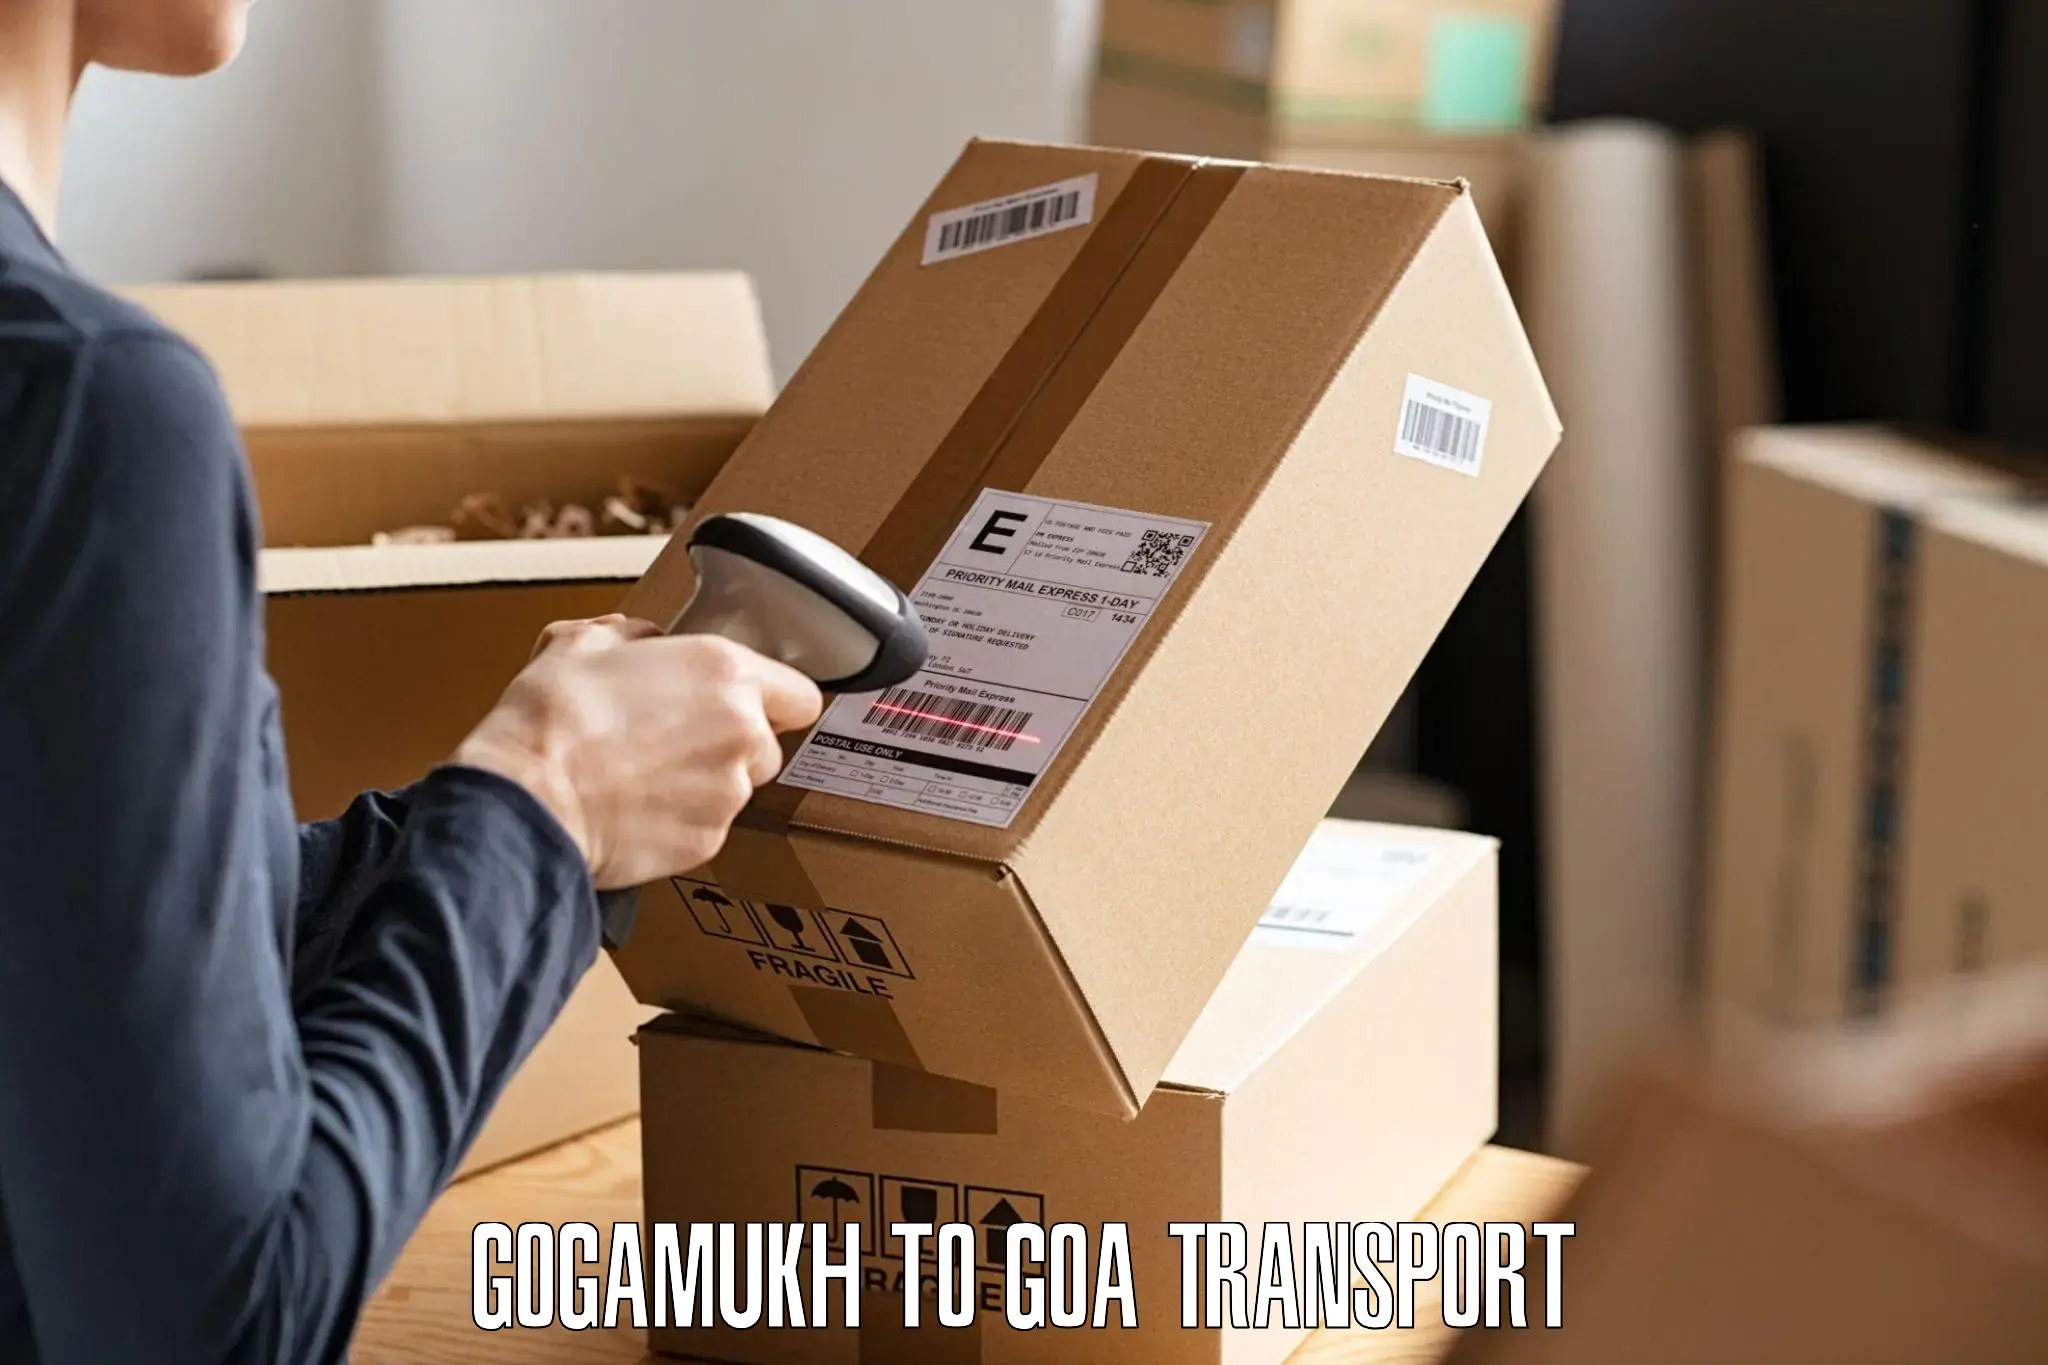 Express transport services Gogamukh to Goa